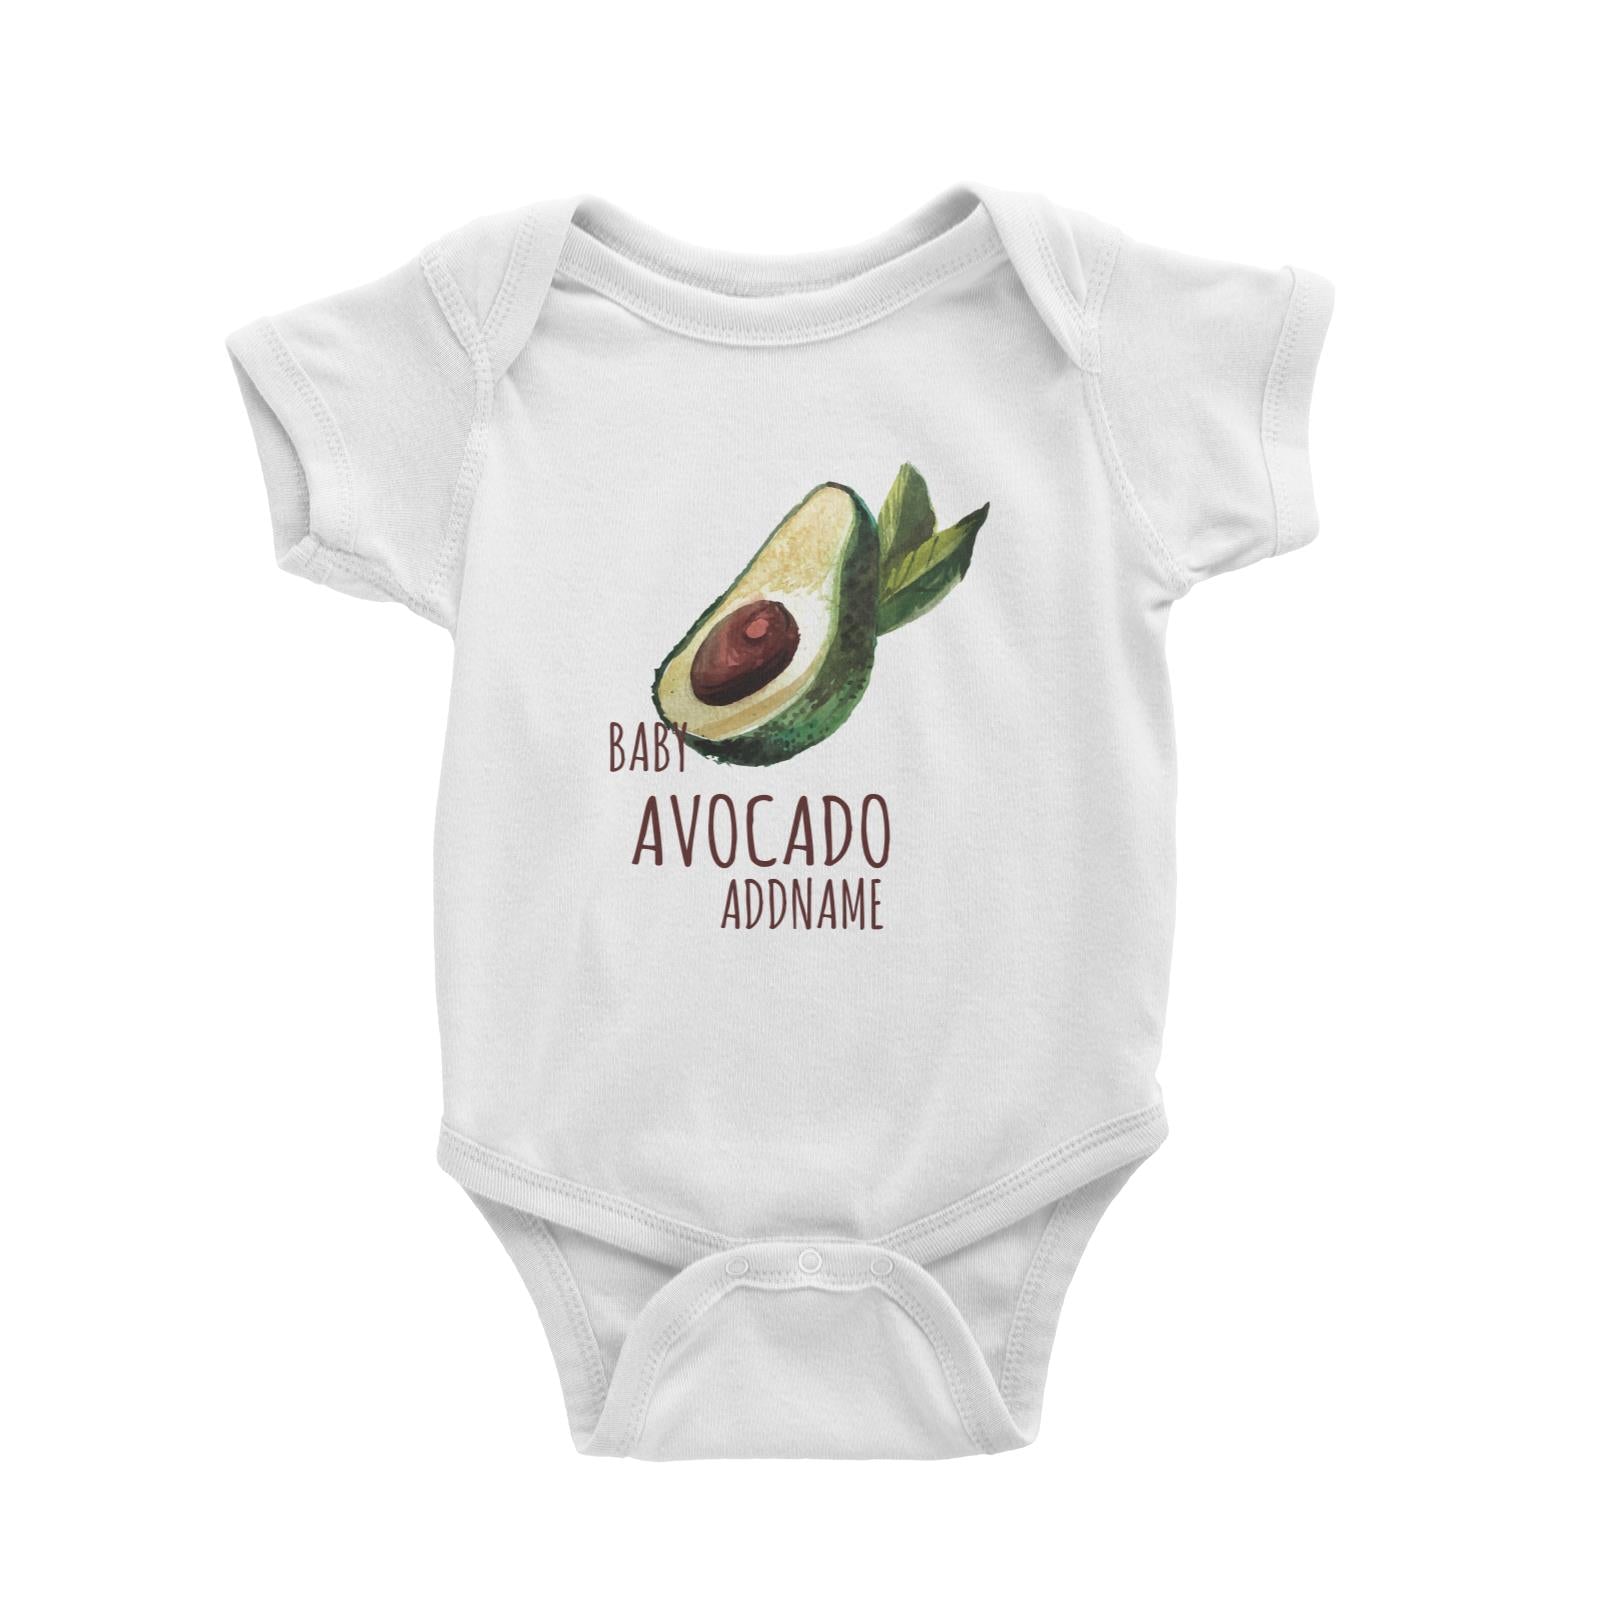 Baby Avocado White Baby Romper